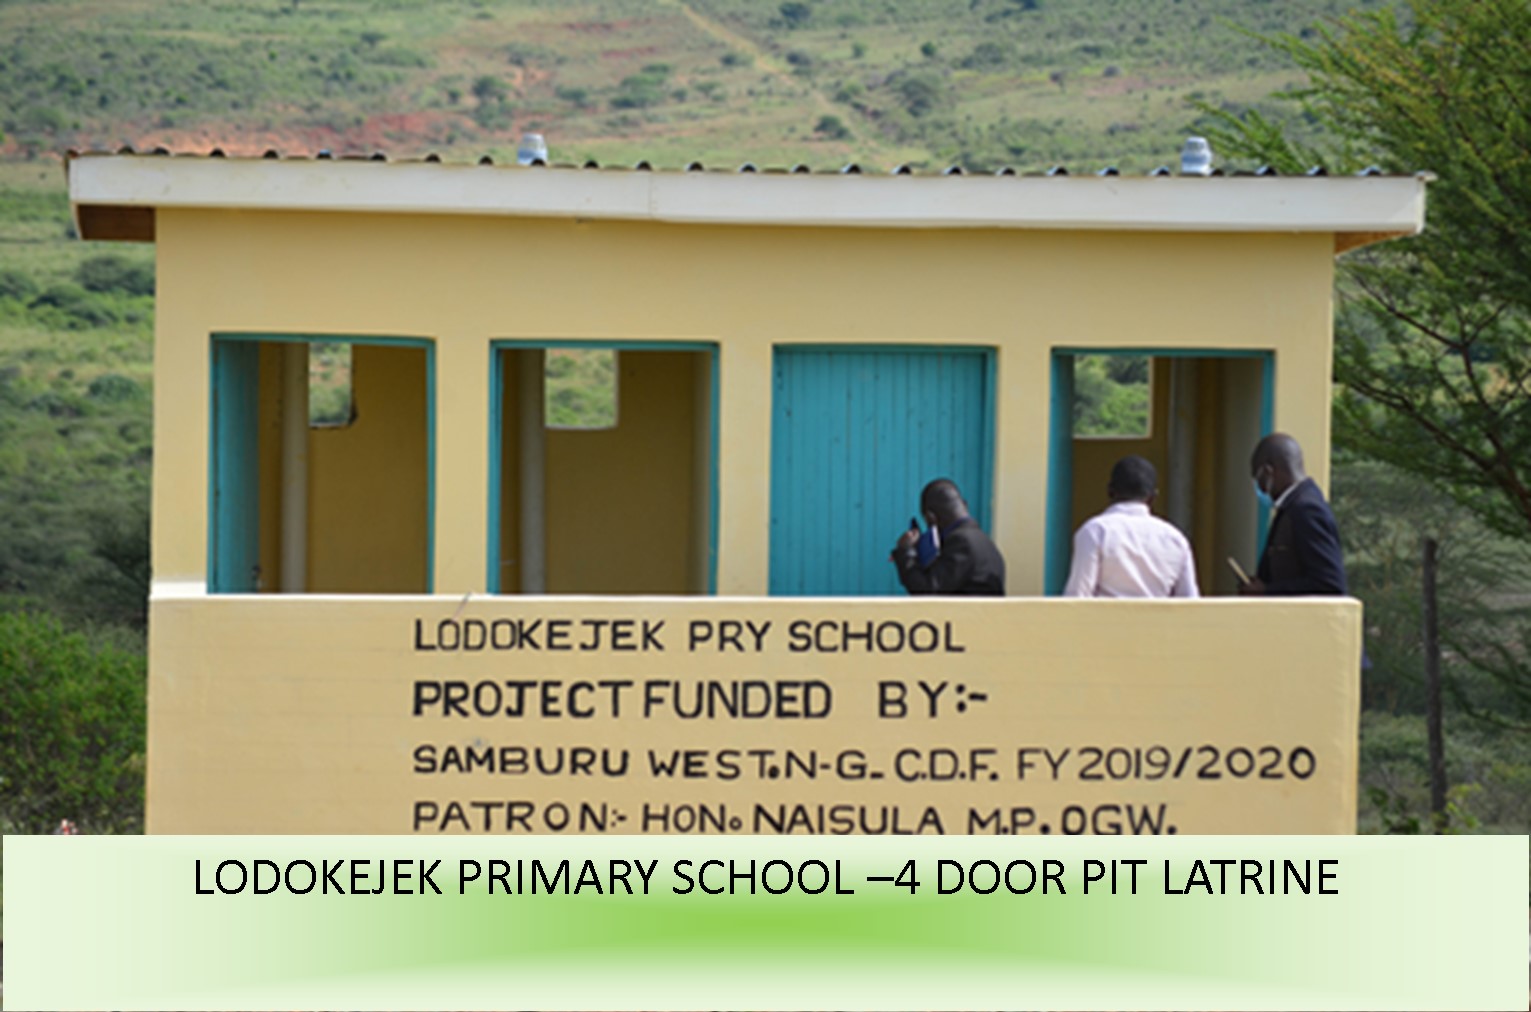 https://samburu-west.ngcdf.go.ke/wp-content/uploads/2021/08/lodokejek-primary-school-4-door-pit-latrine.jpg